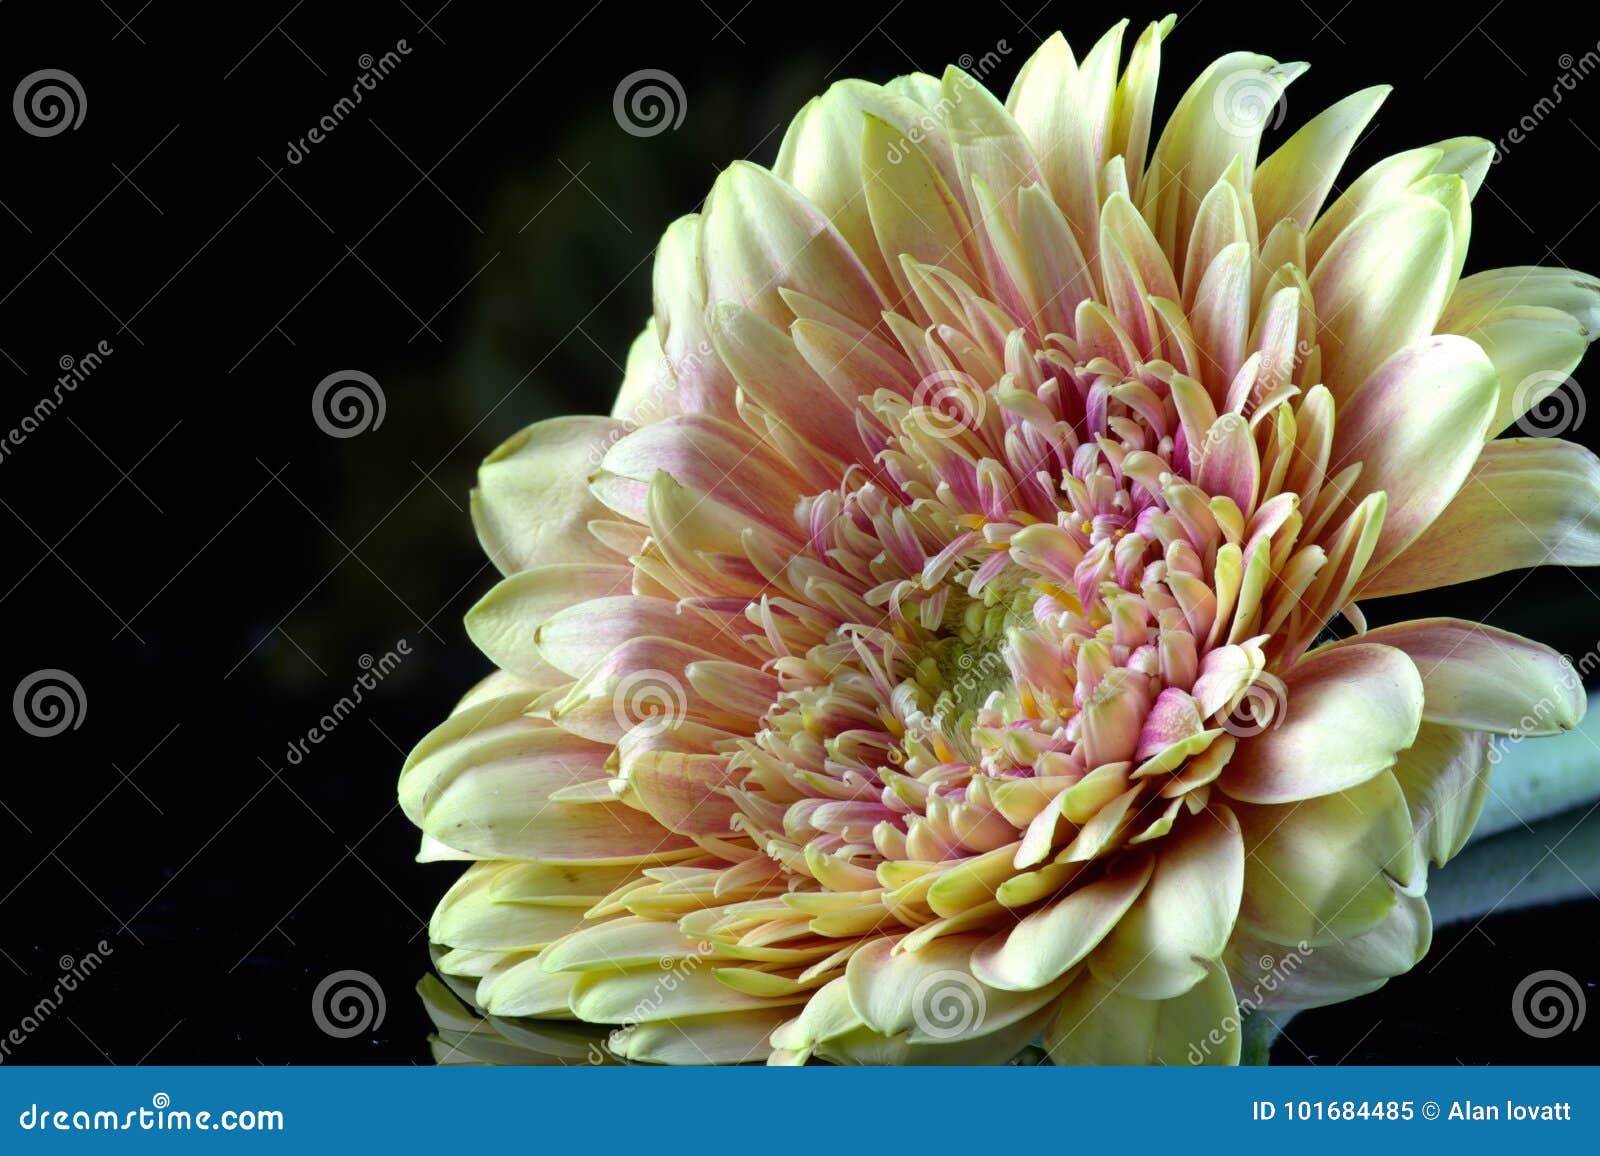 chrysanthemum side view